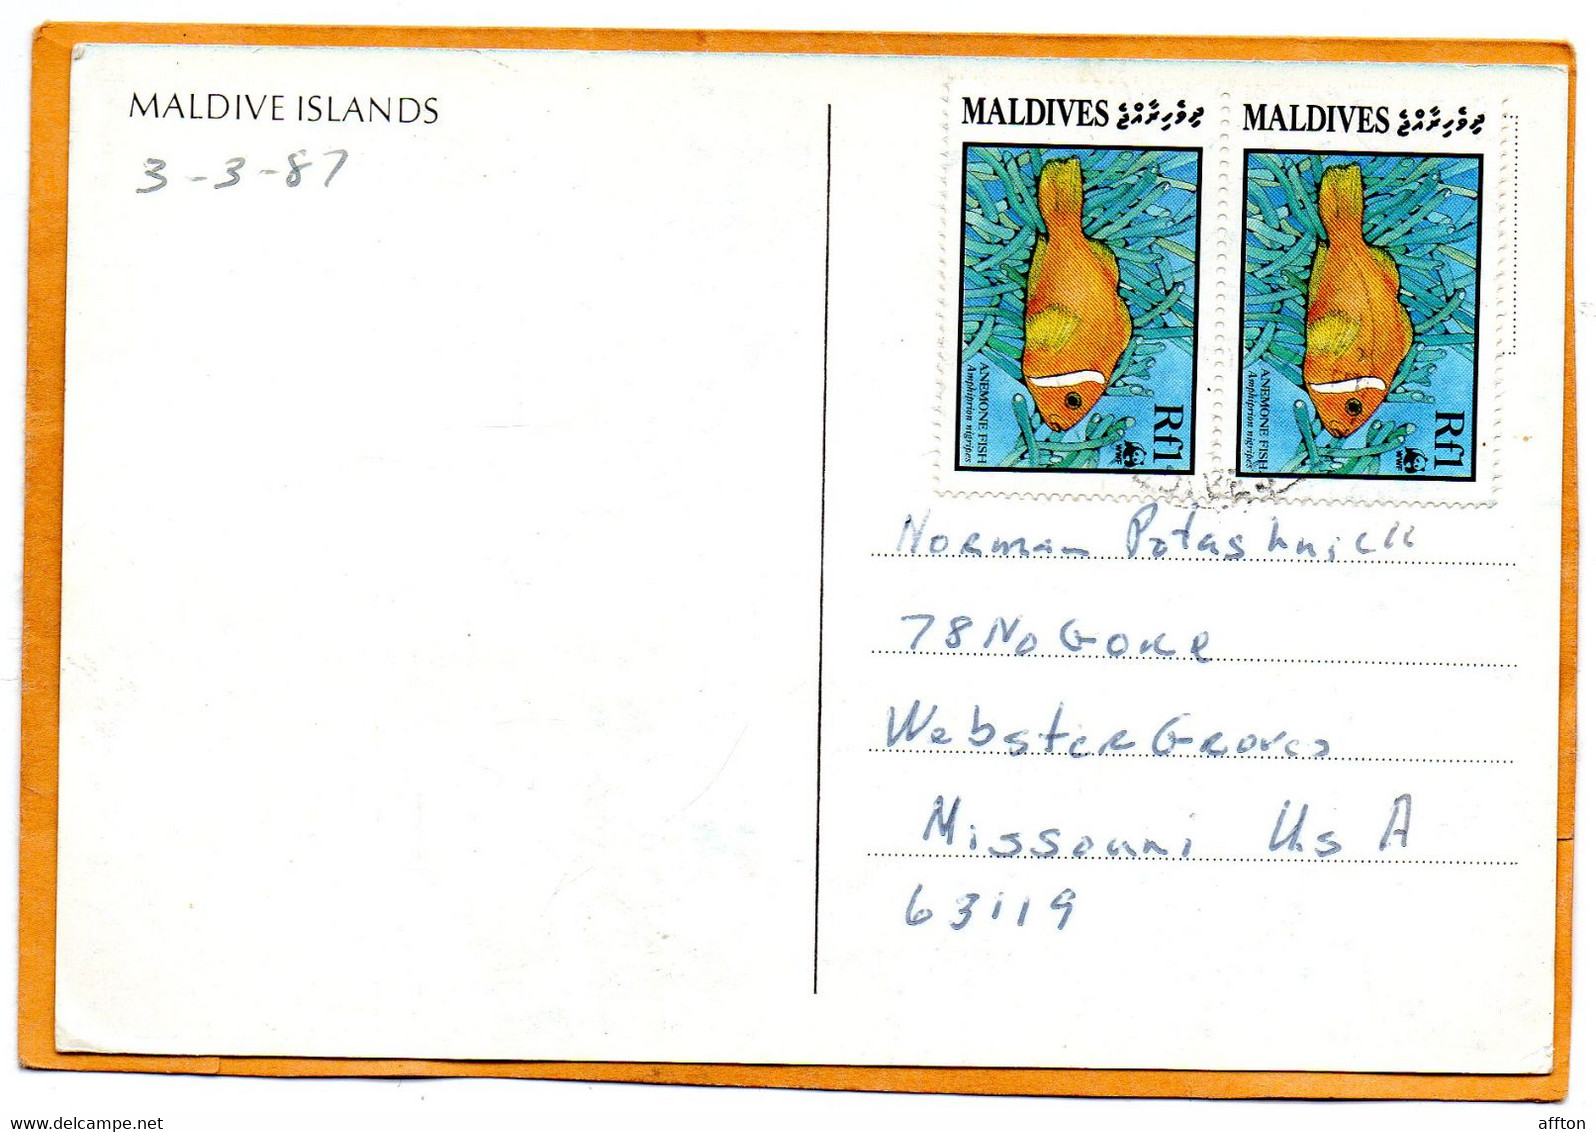 Maldives Islands Old Postcard Mailed - Maldives